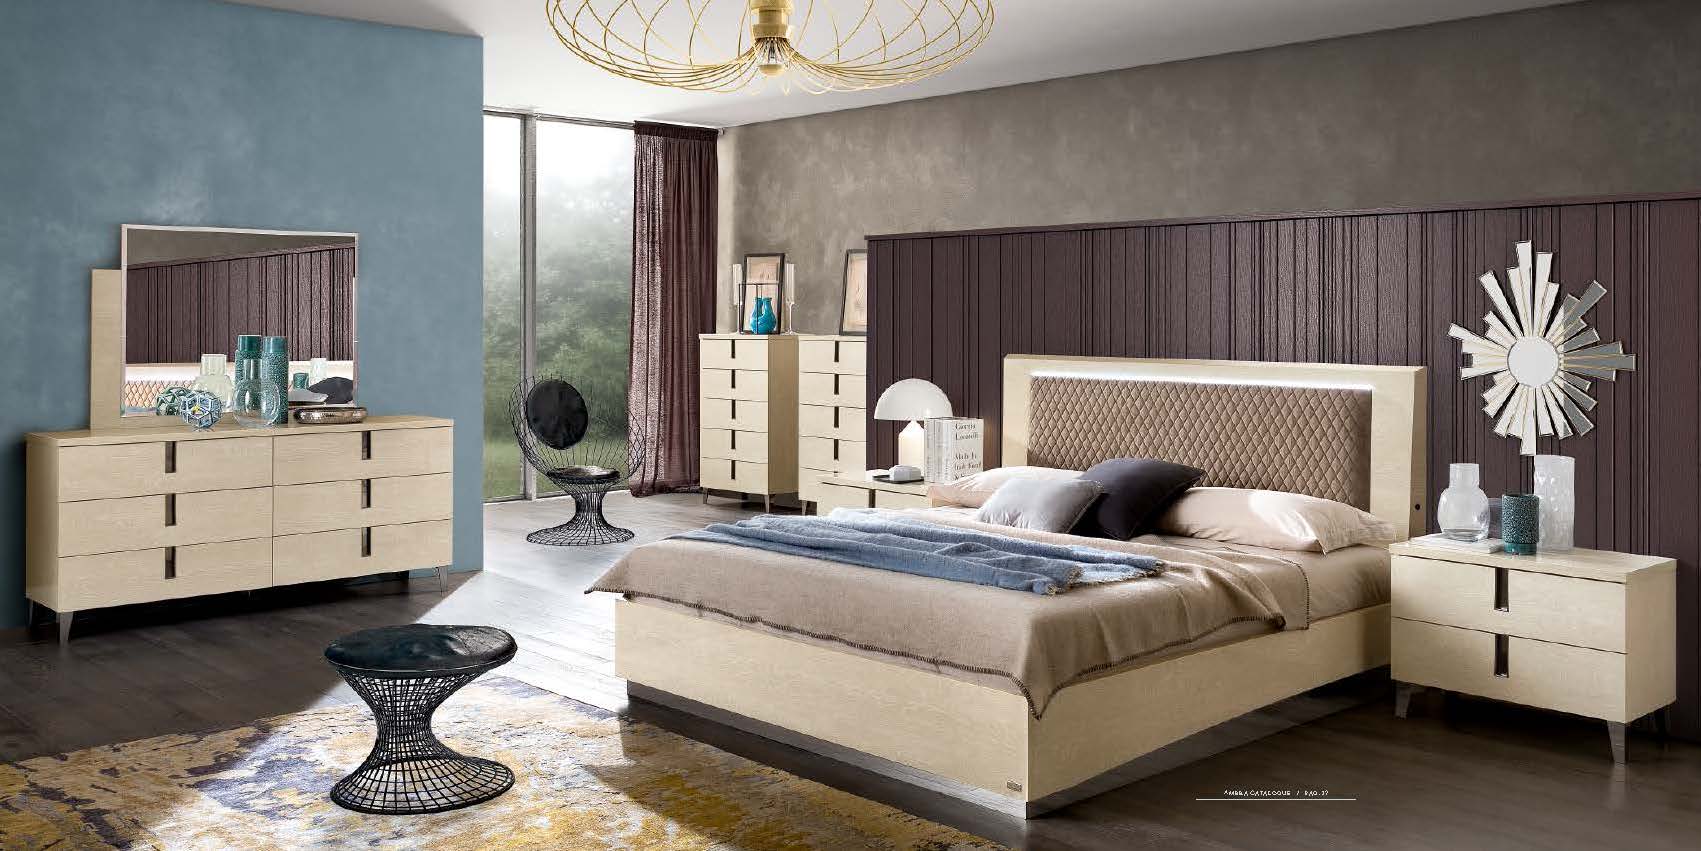 Bedroom Furniture Nightstands Ambra Bedroom Additional Items